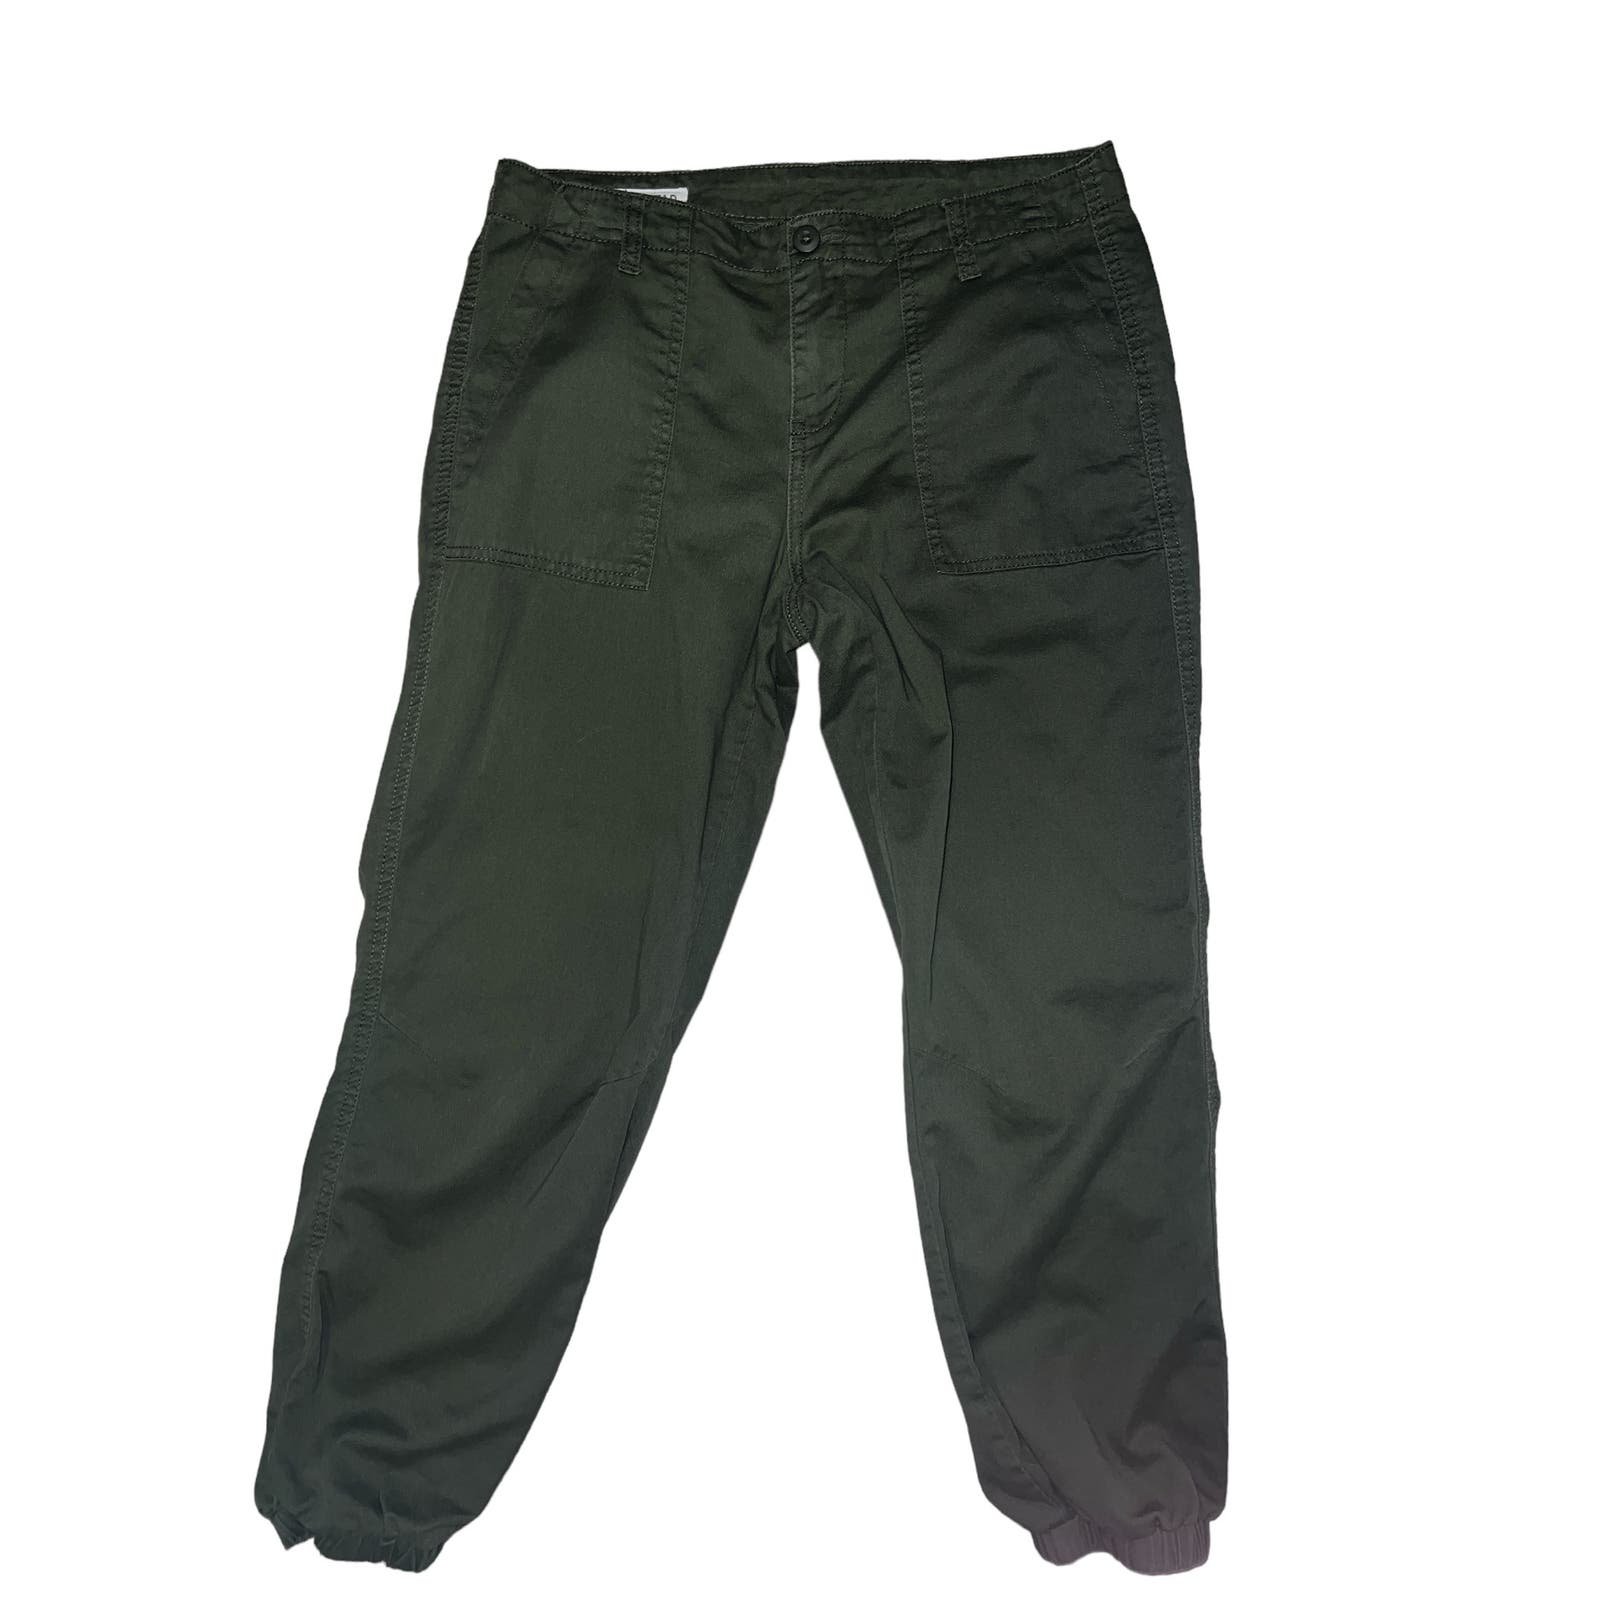 Exclusive Women’s camo green cargo pants size 7 HSmWLSH